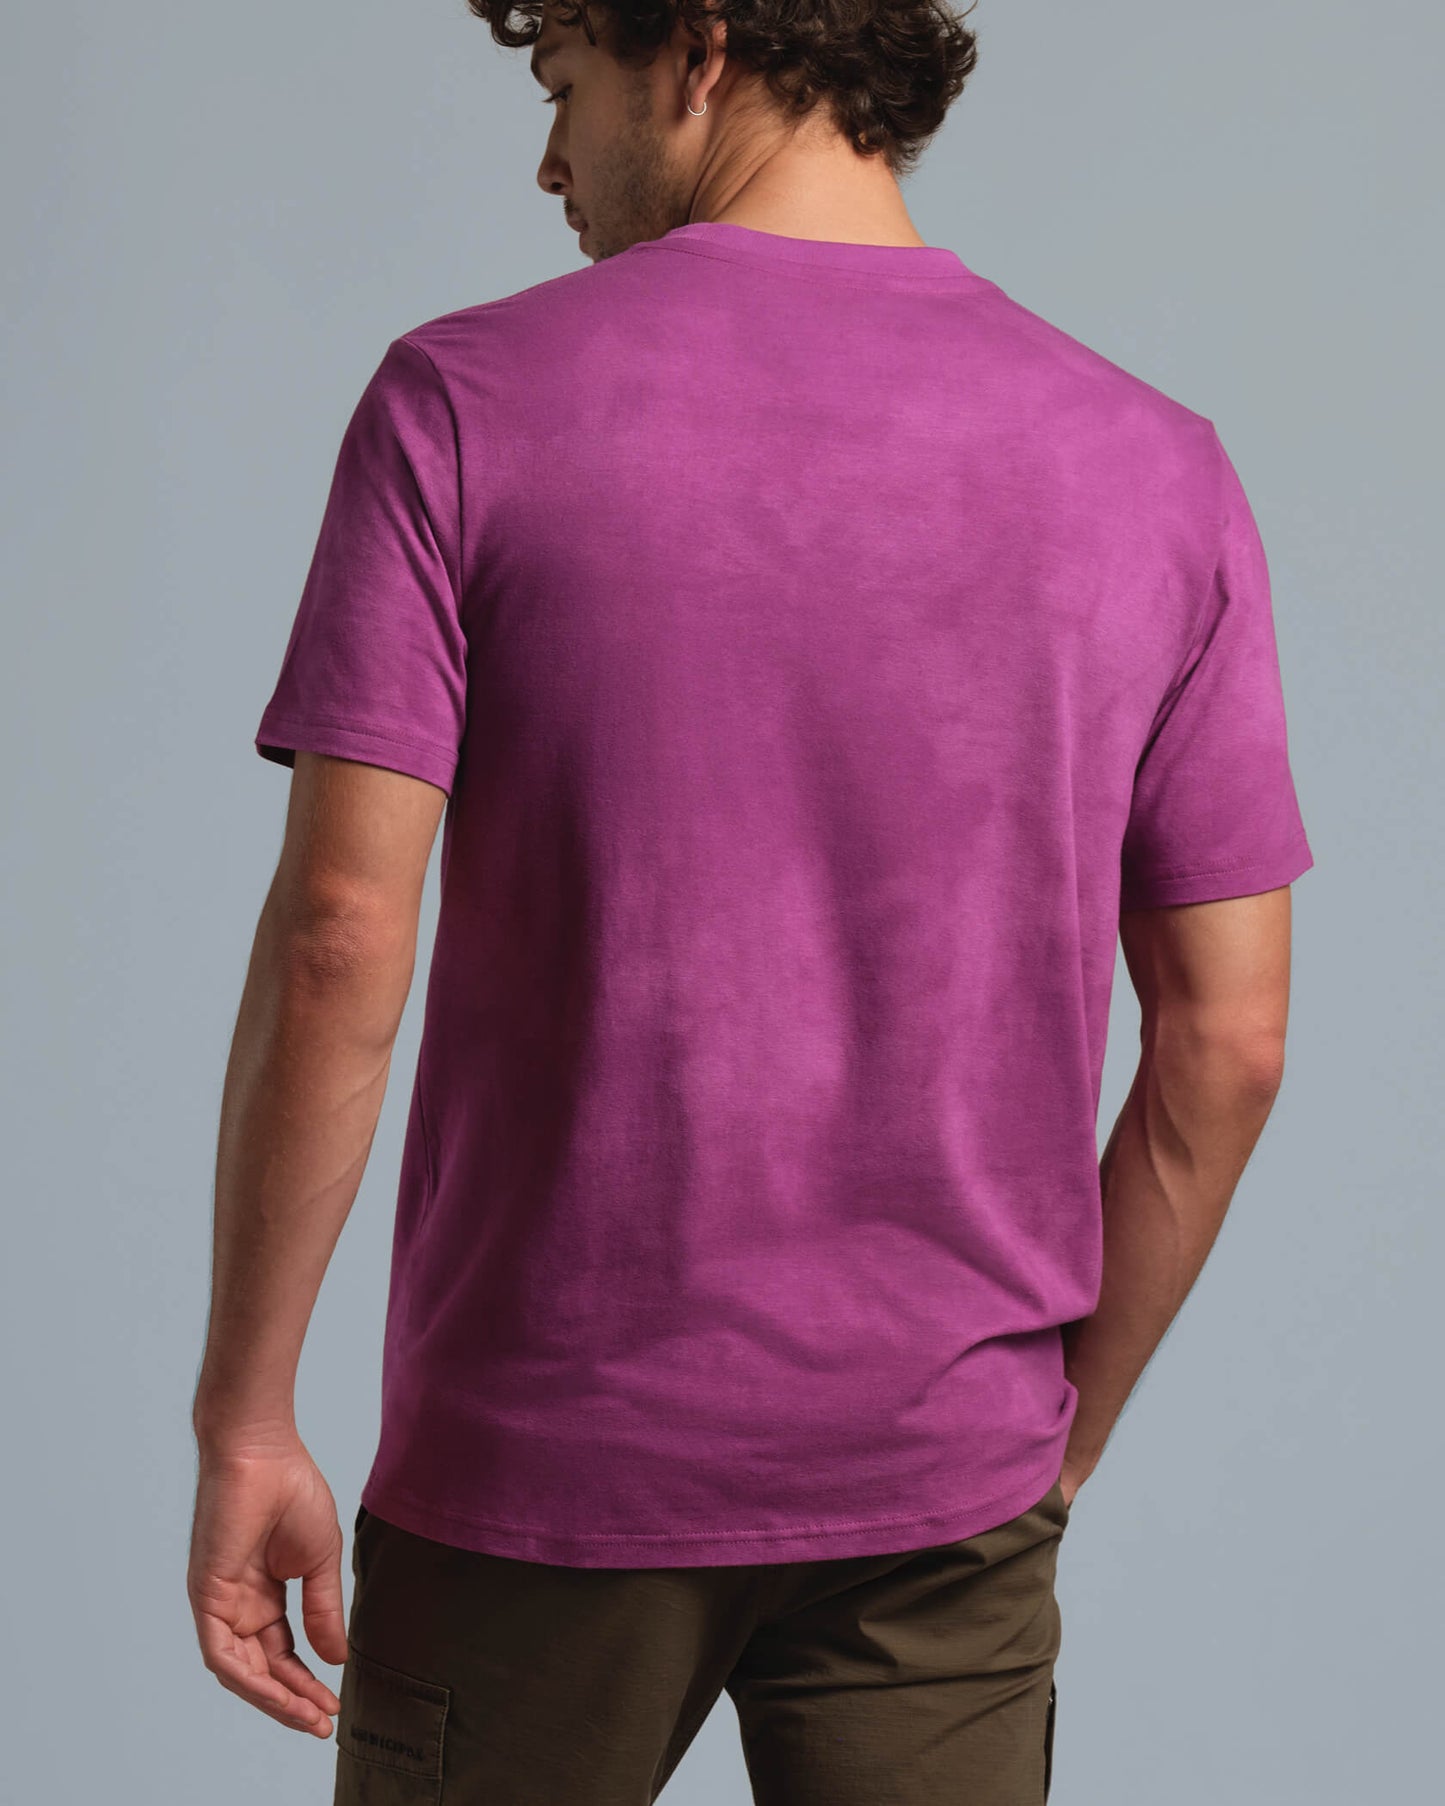 Enduro Stretch T-Shirt |Bright Berry Color Wash| detail